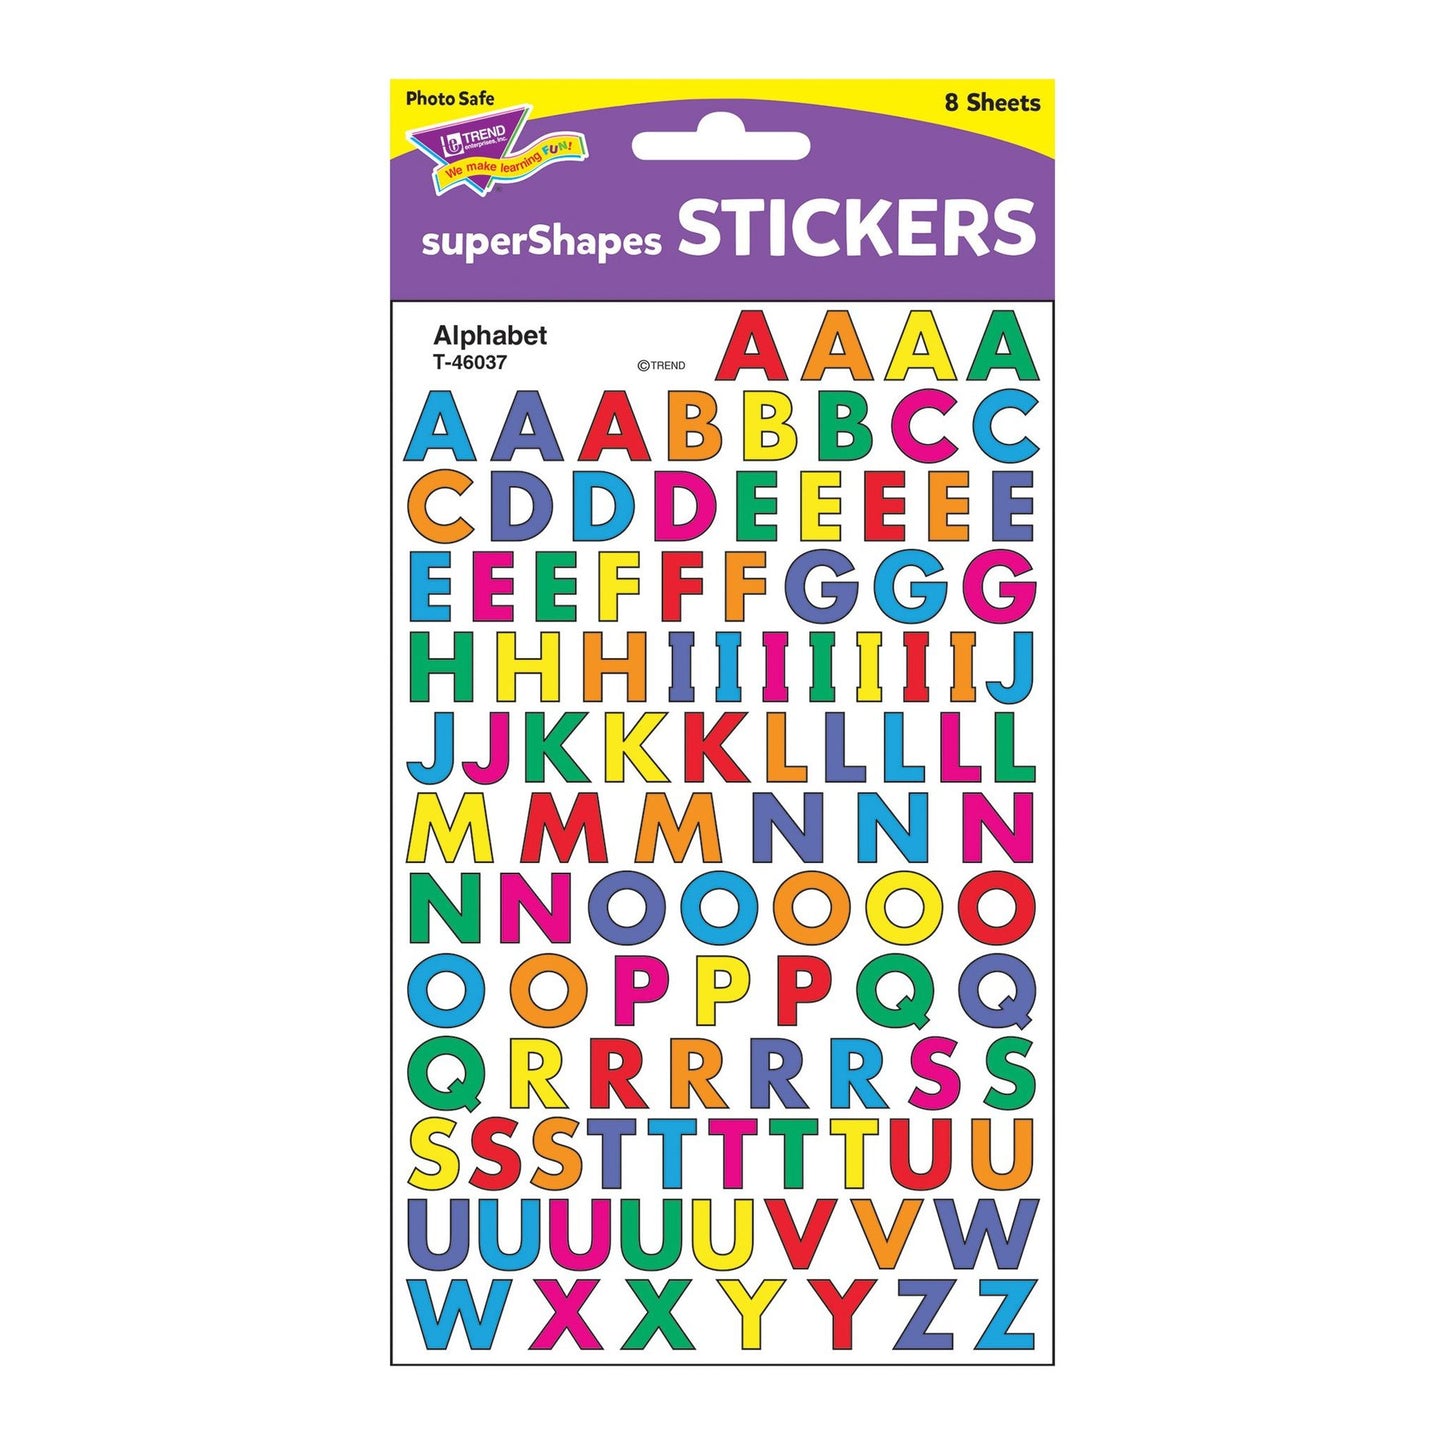 Alphabet superShapes Stickers